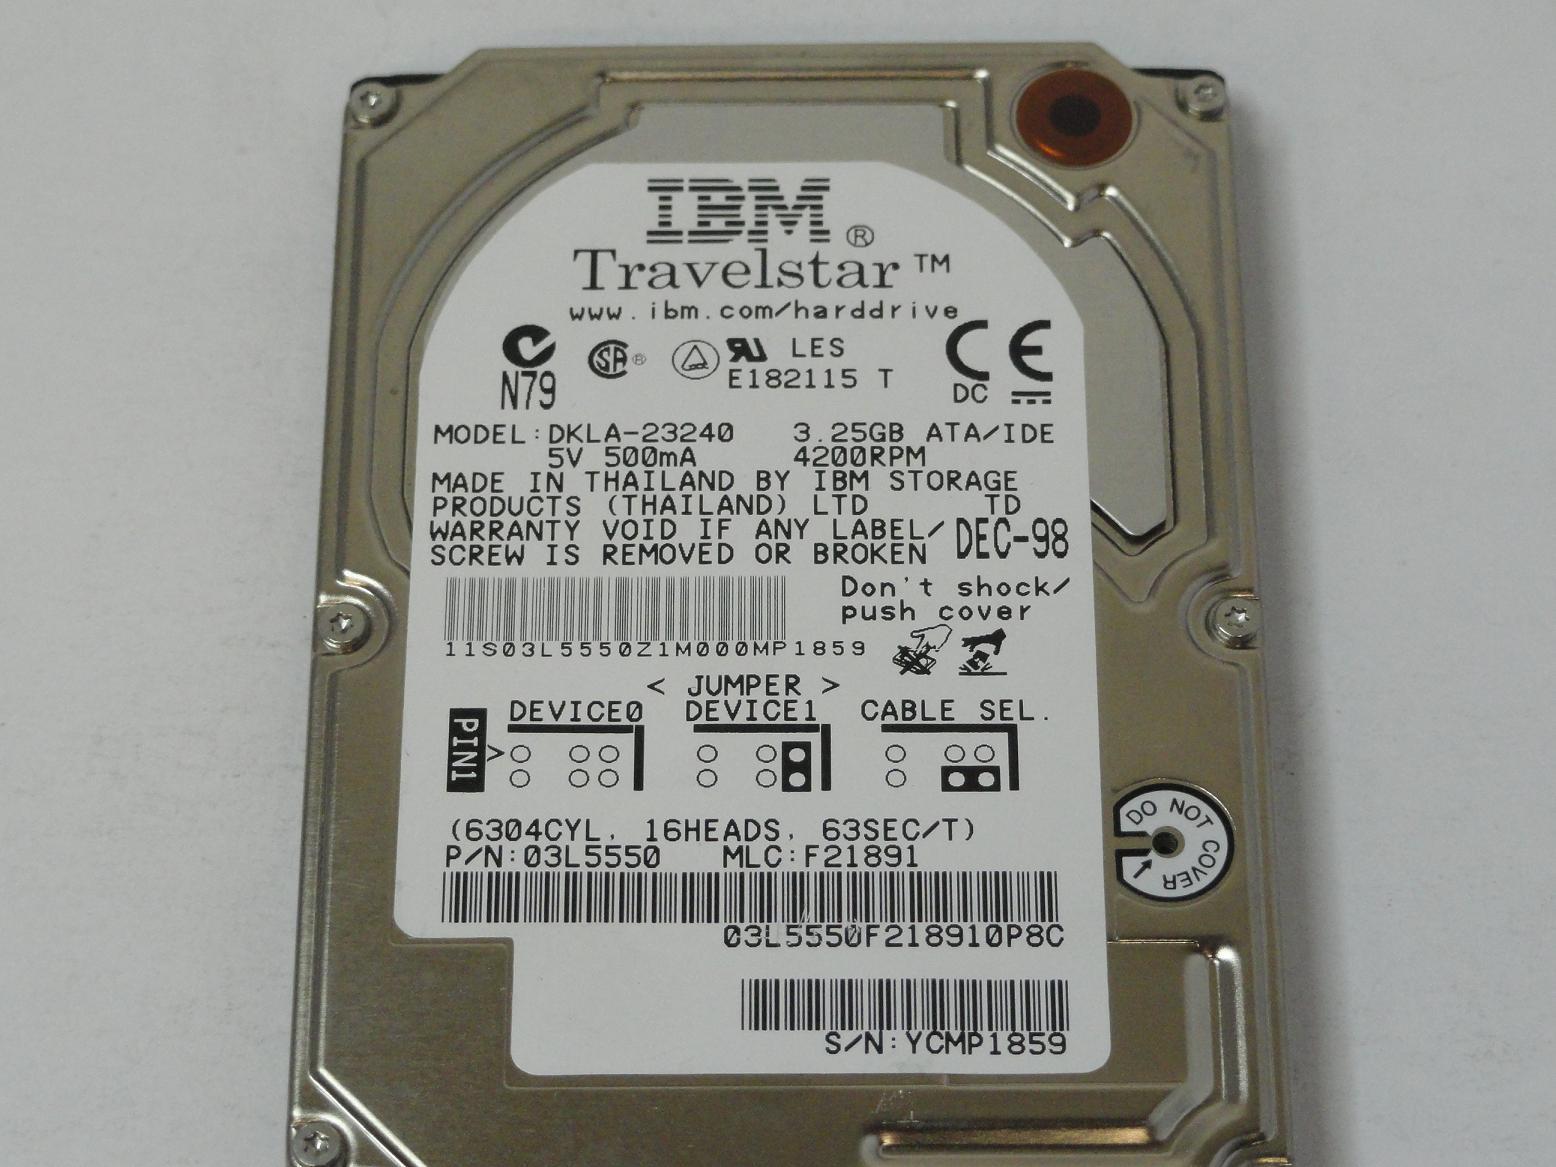 MC0074_03L5550_IBM 3.25GB IDE 4200rpm 2.5in HDD - Image3